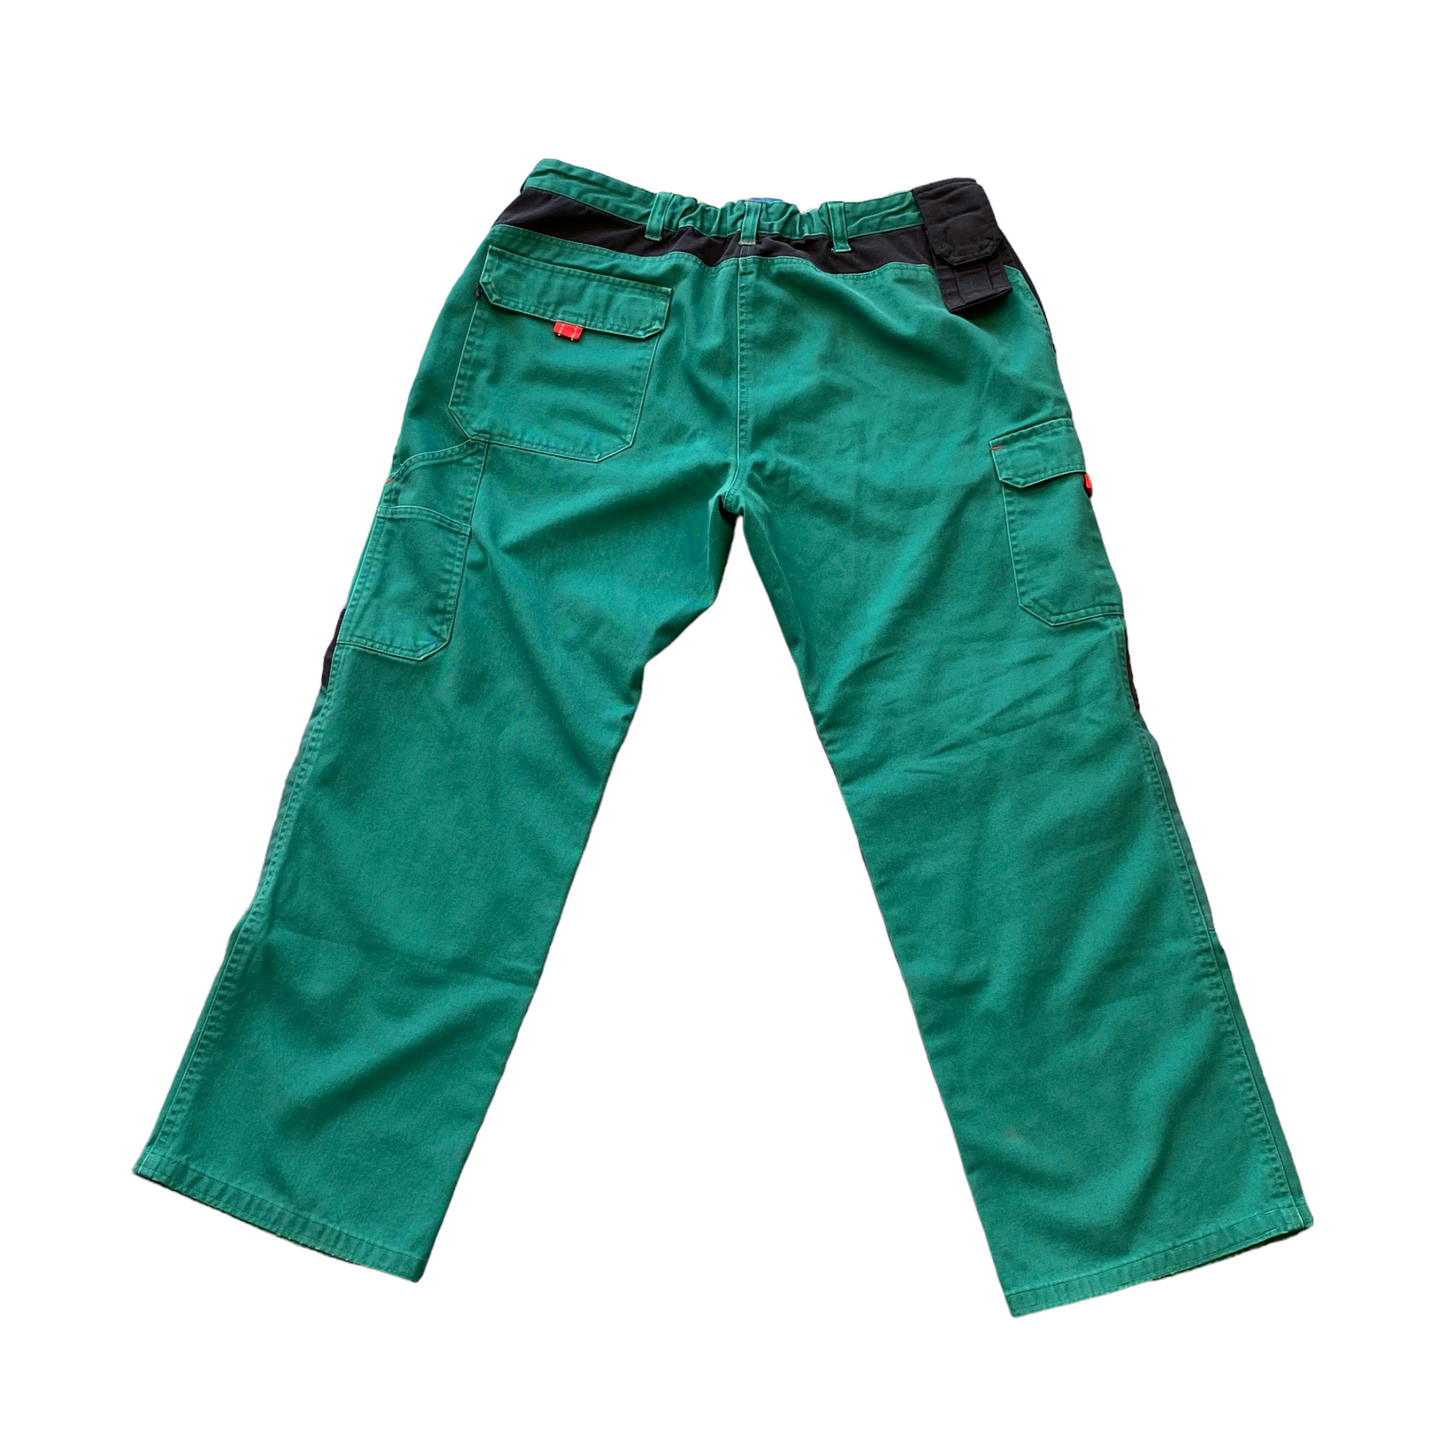 Green European Workwear Pants